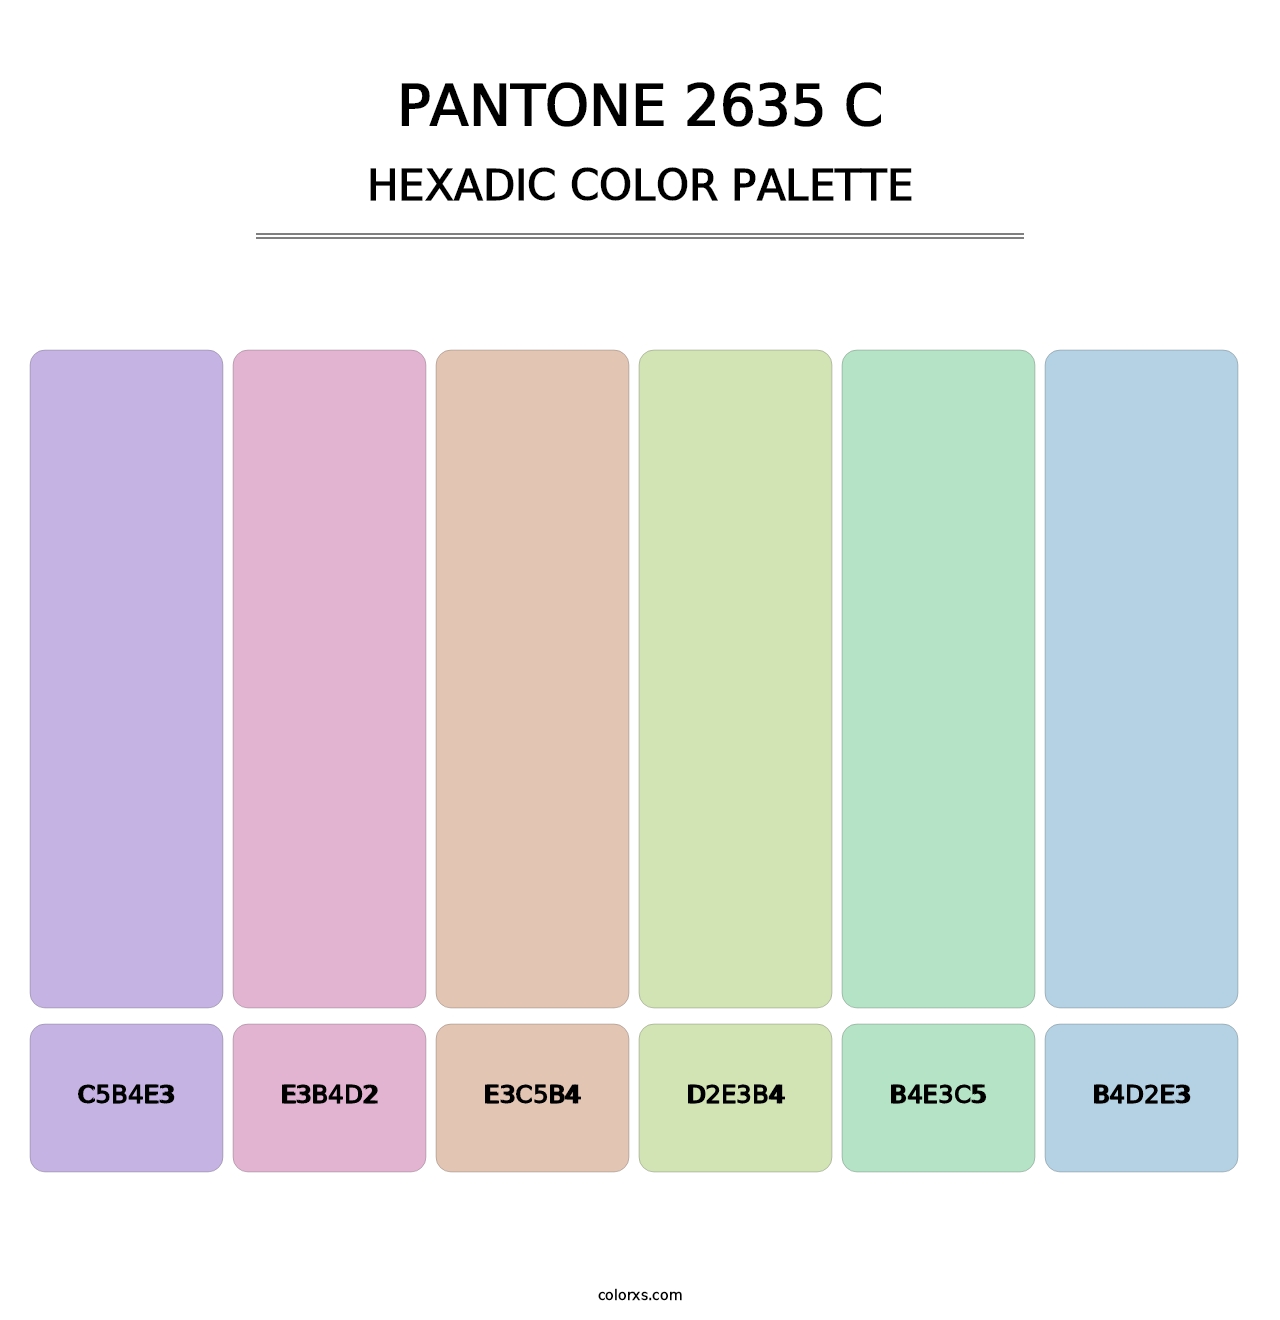 PANTONE 2635 C - Hexadic Color Palette